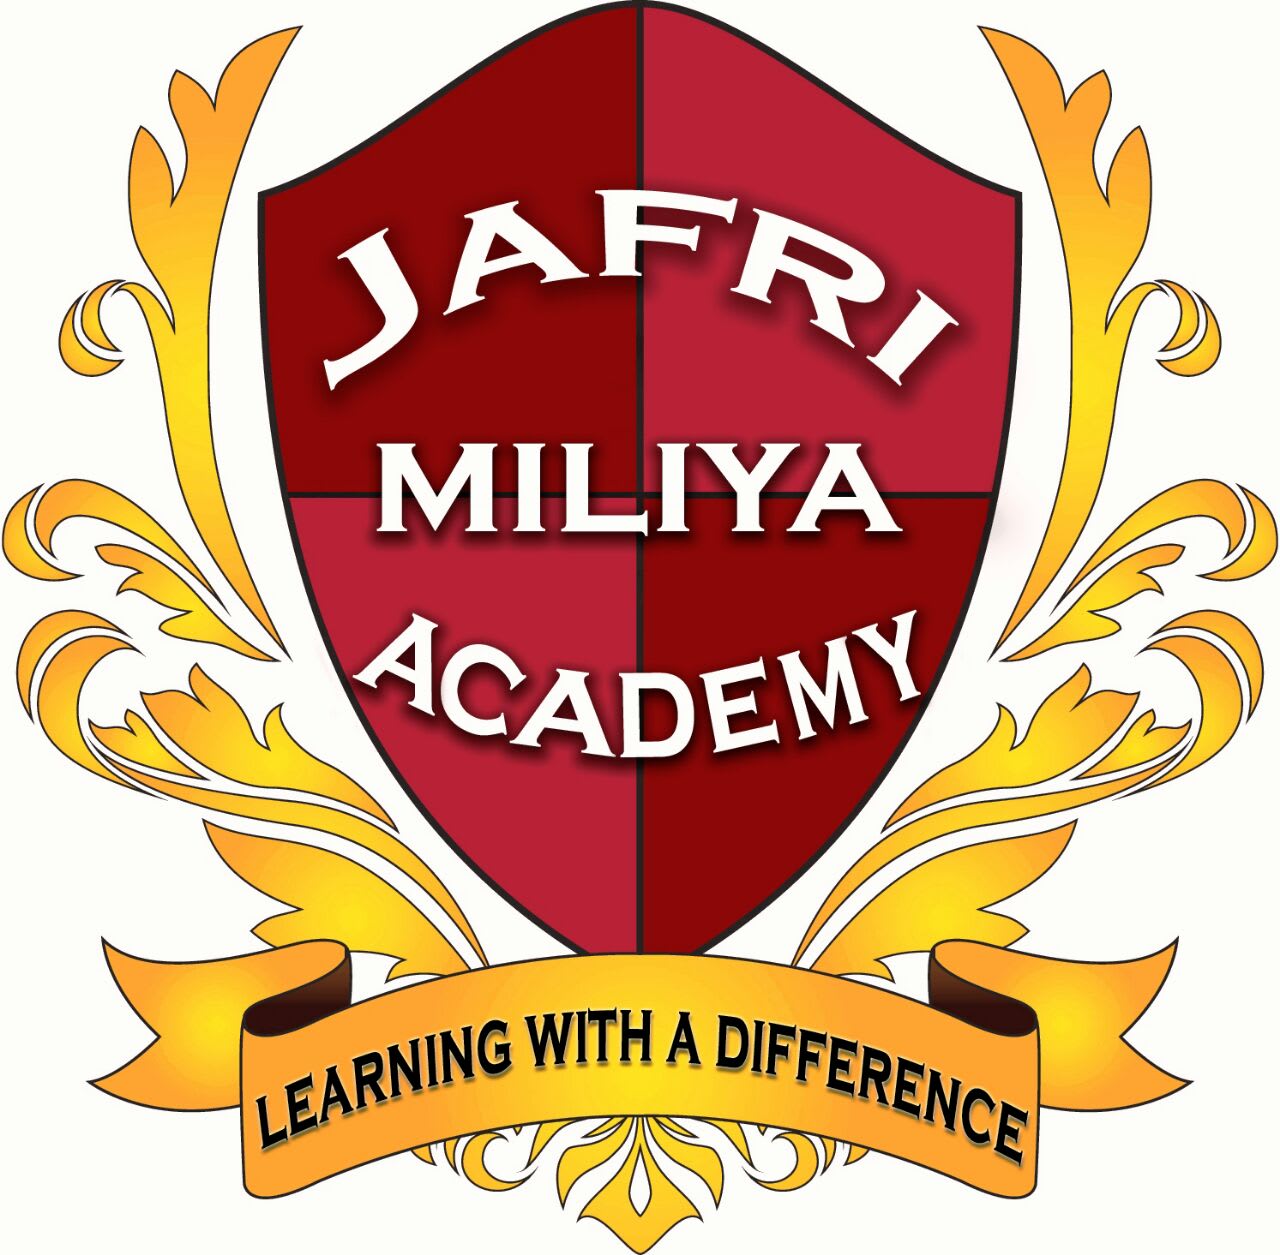 Jafri Miliya Academy